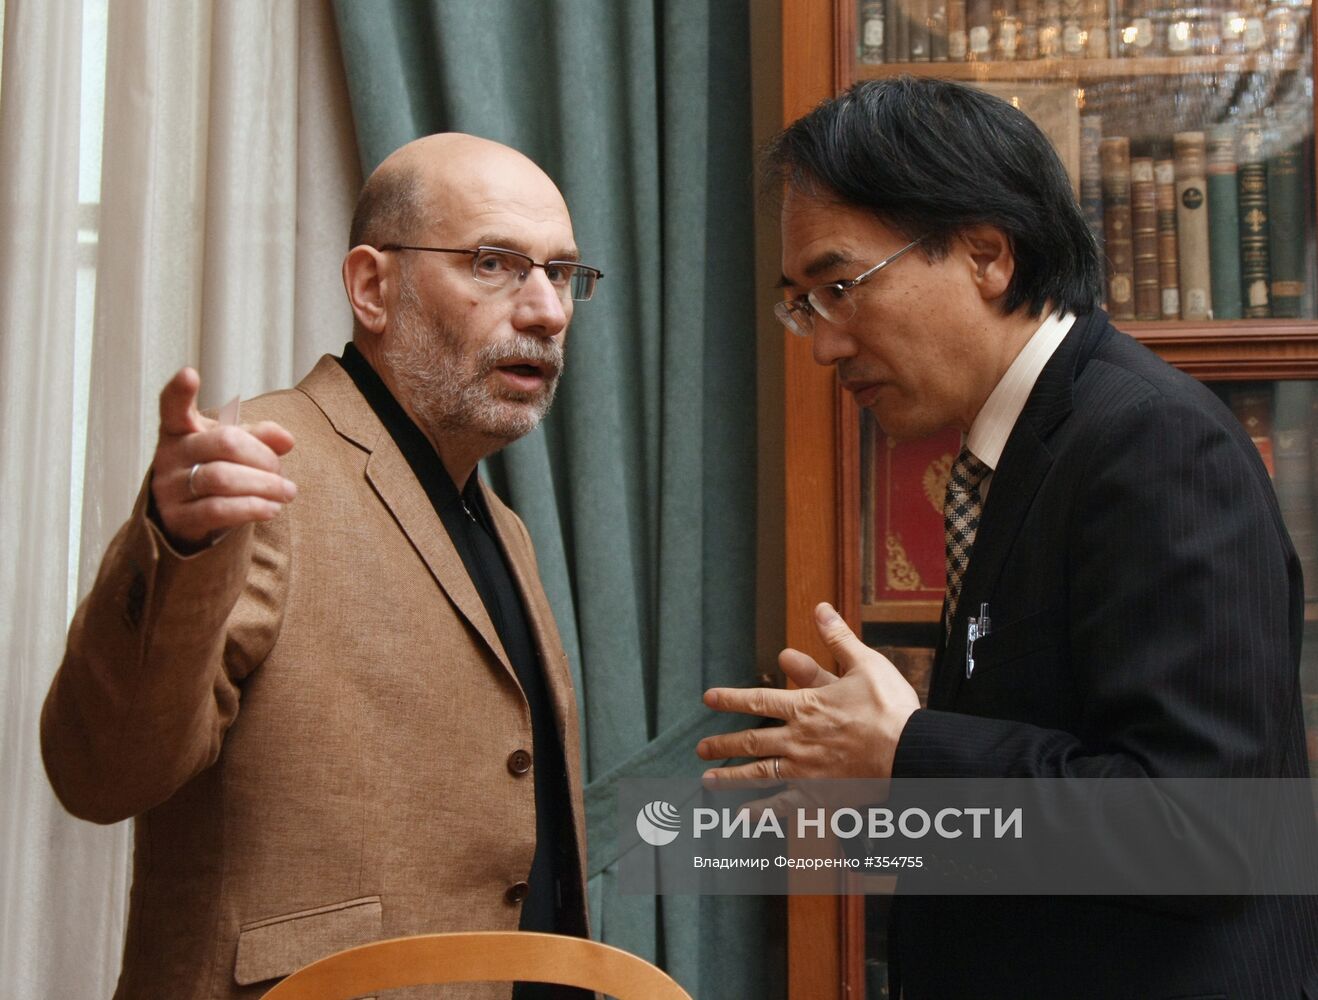 Пресс-конференция Икуо Камэямы и Бориса Акунина